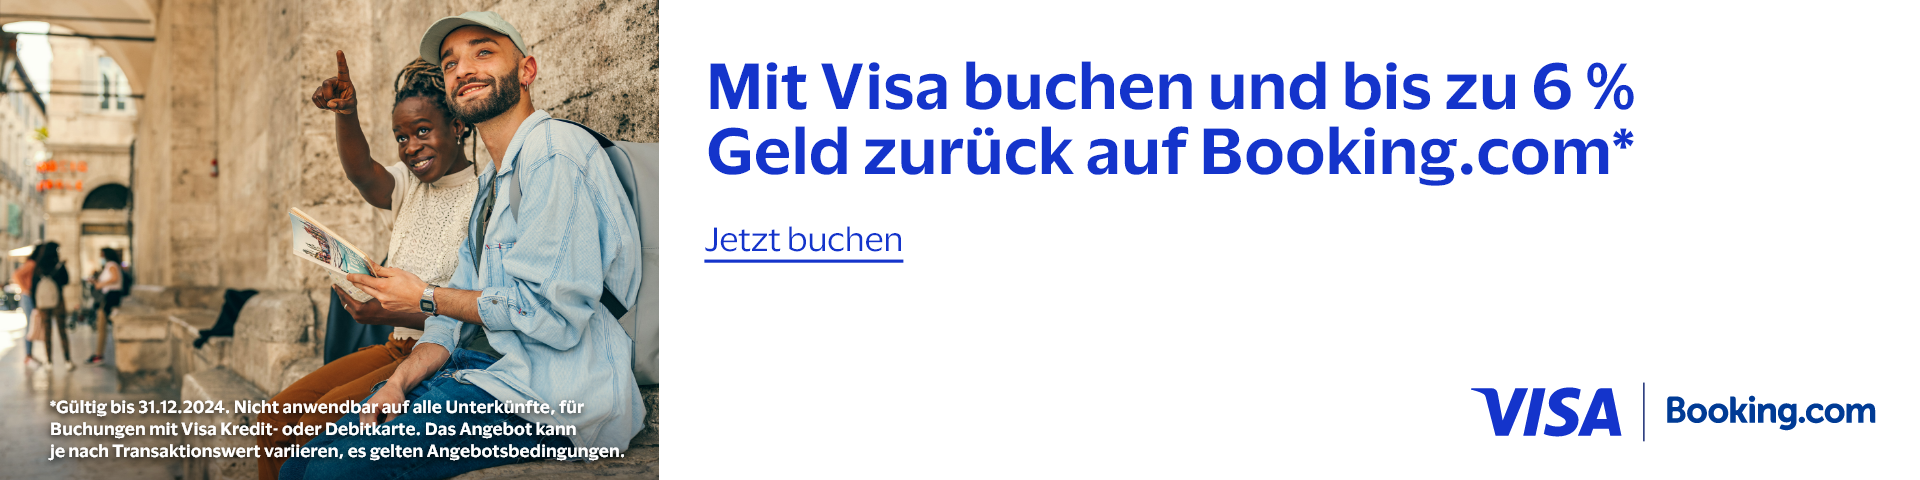 Visa und Booking.com